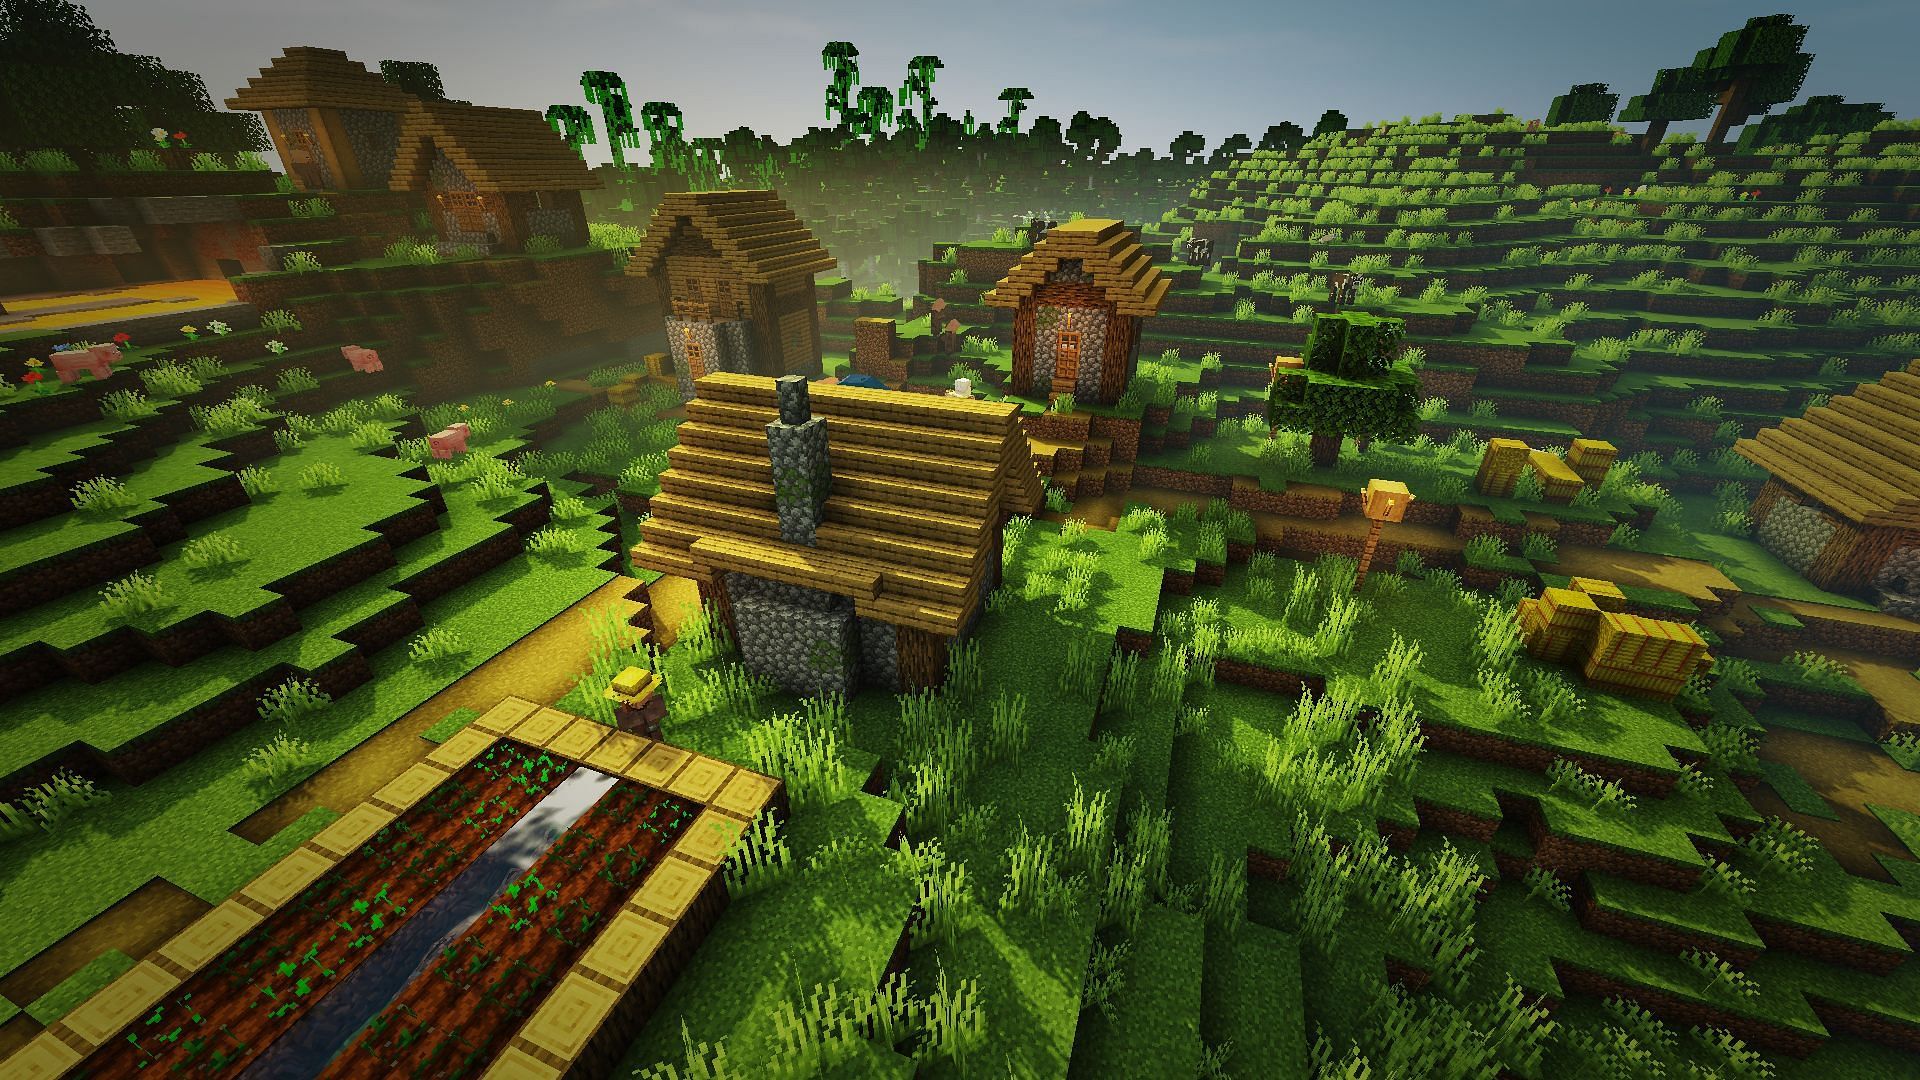 The plains village using the Werrus Default shader (Image via Minecraft)